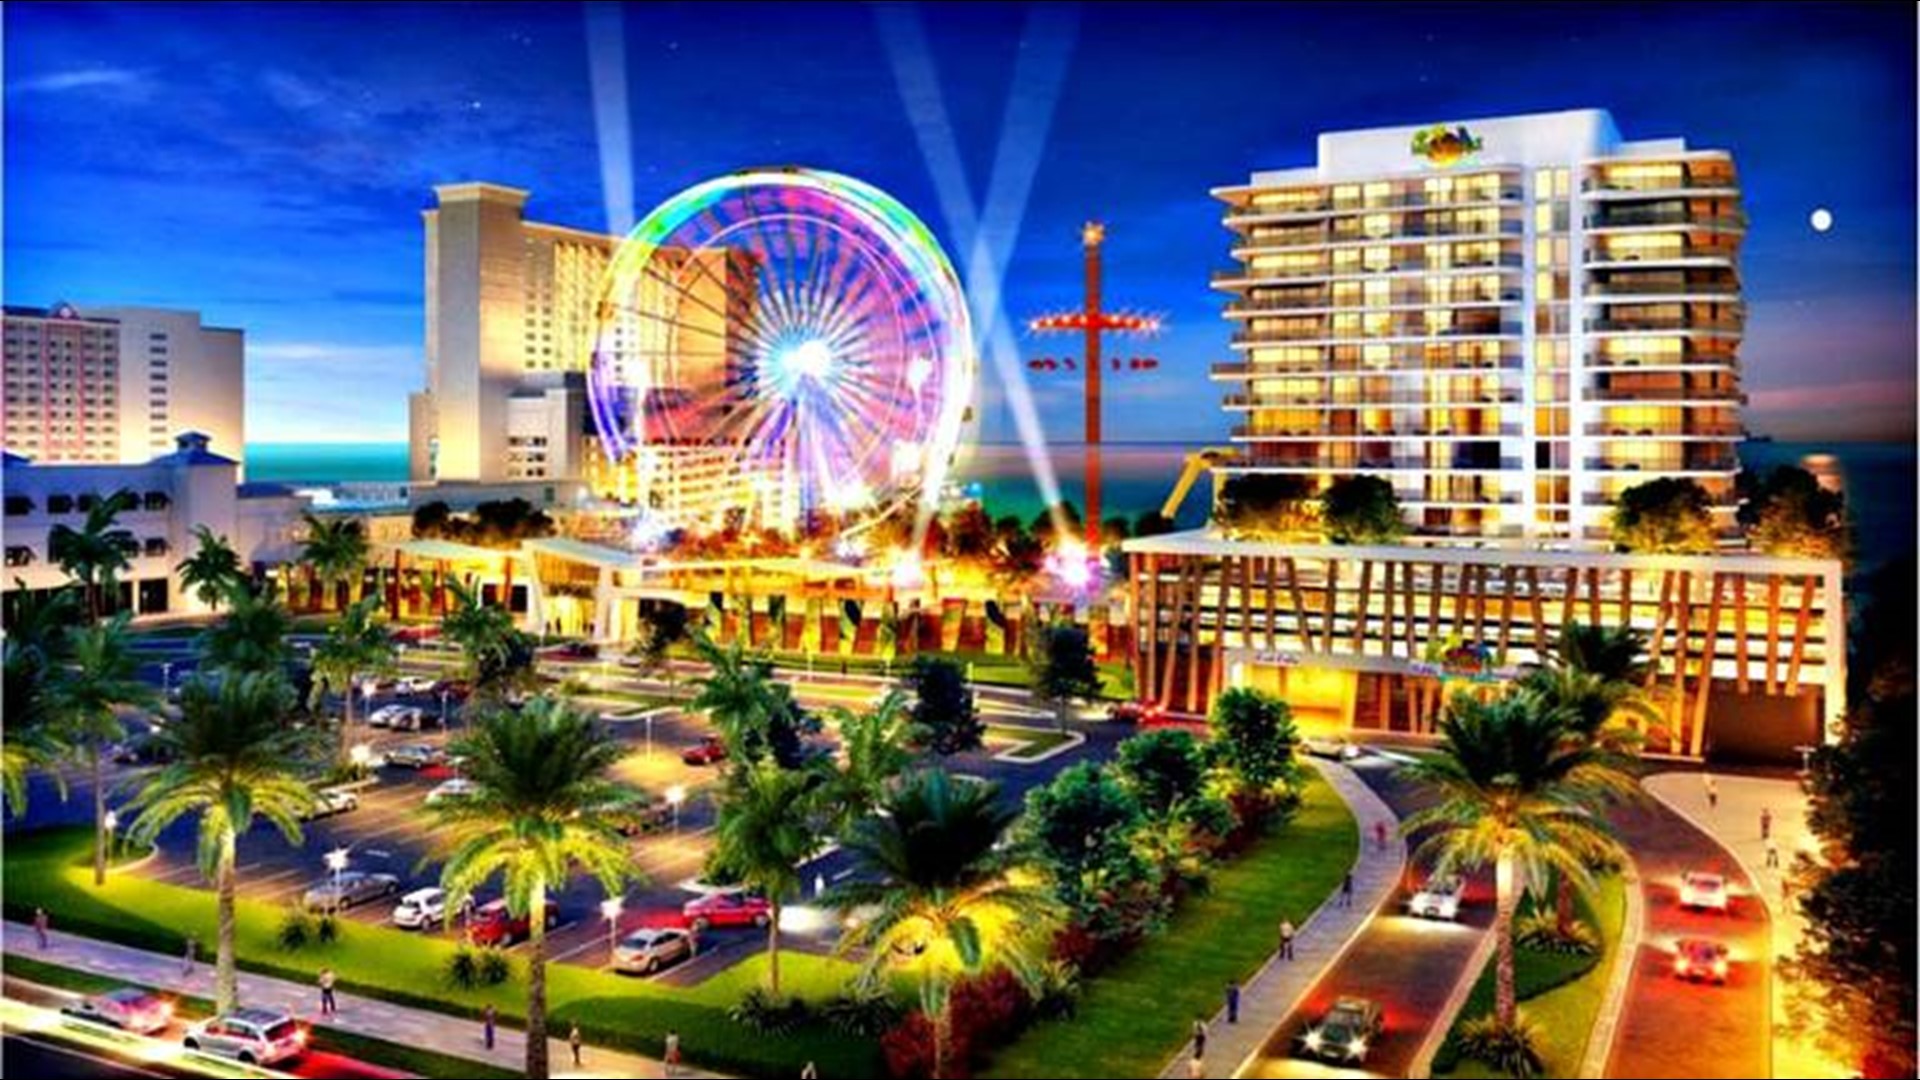 Margaritaville Biloxi resort plans 140M amusement park and hotel tower